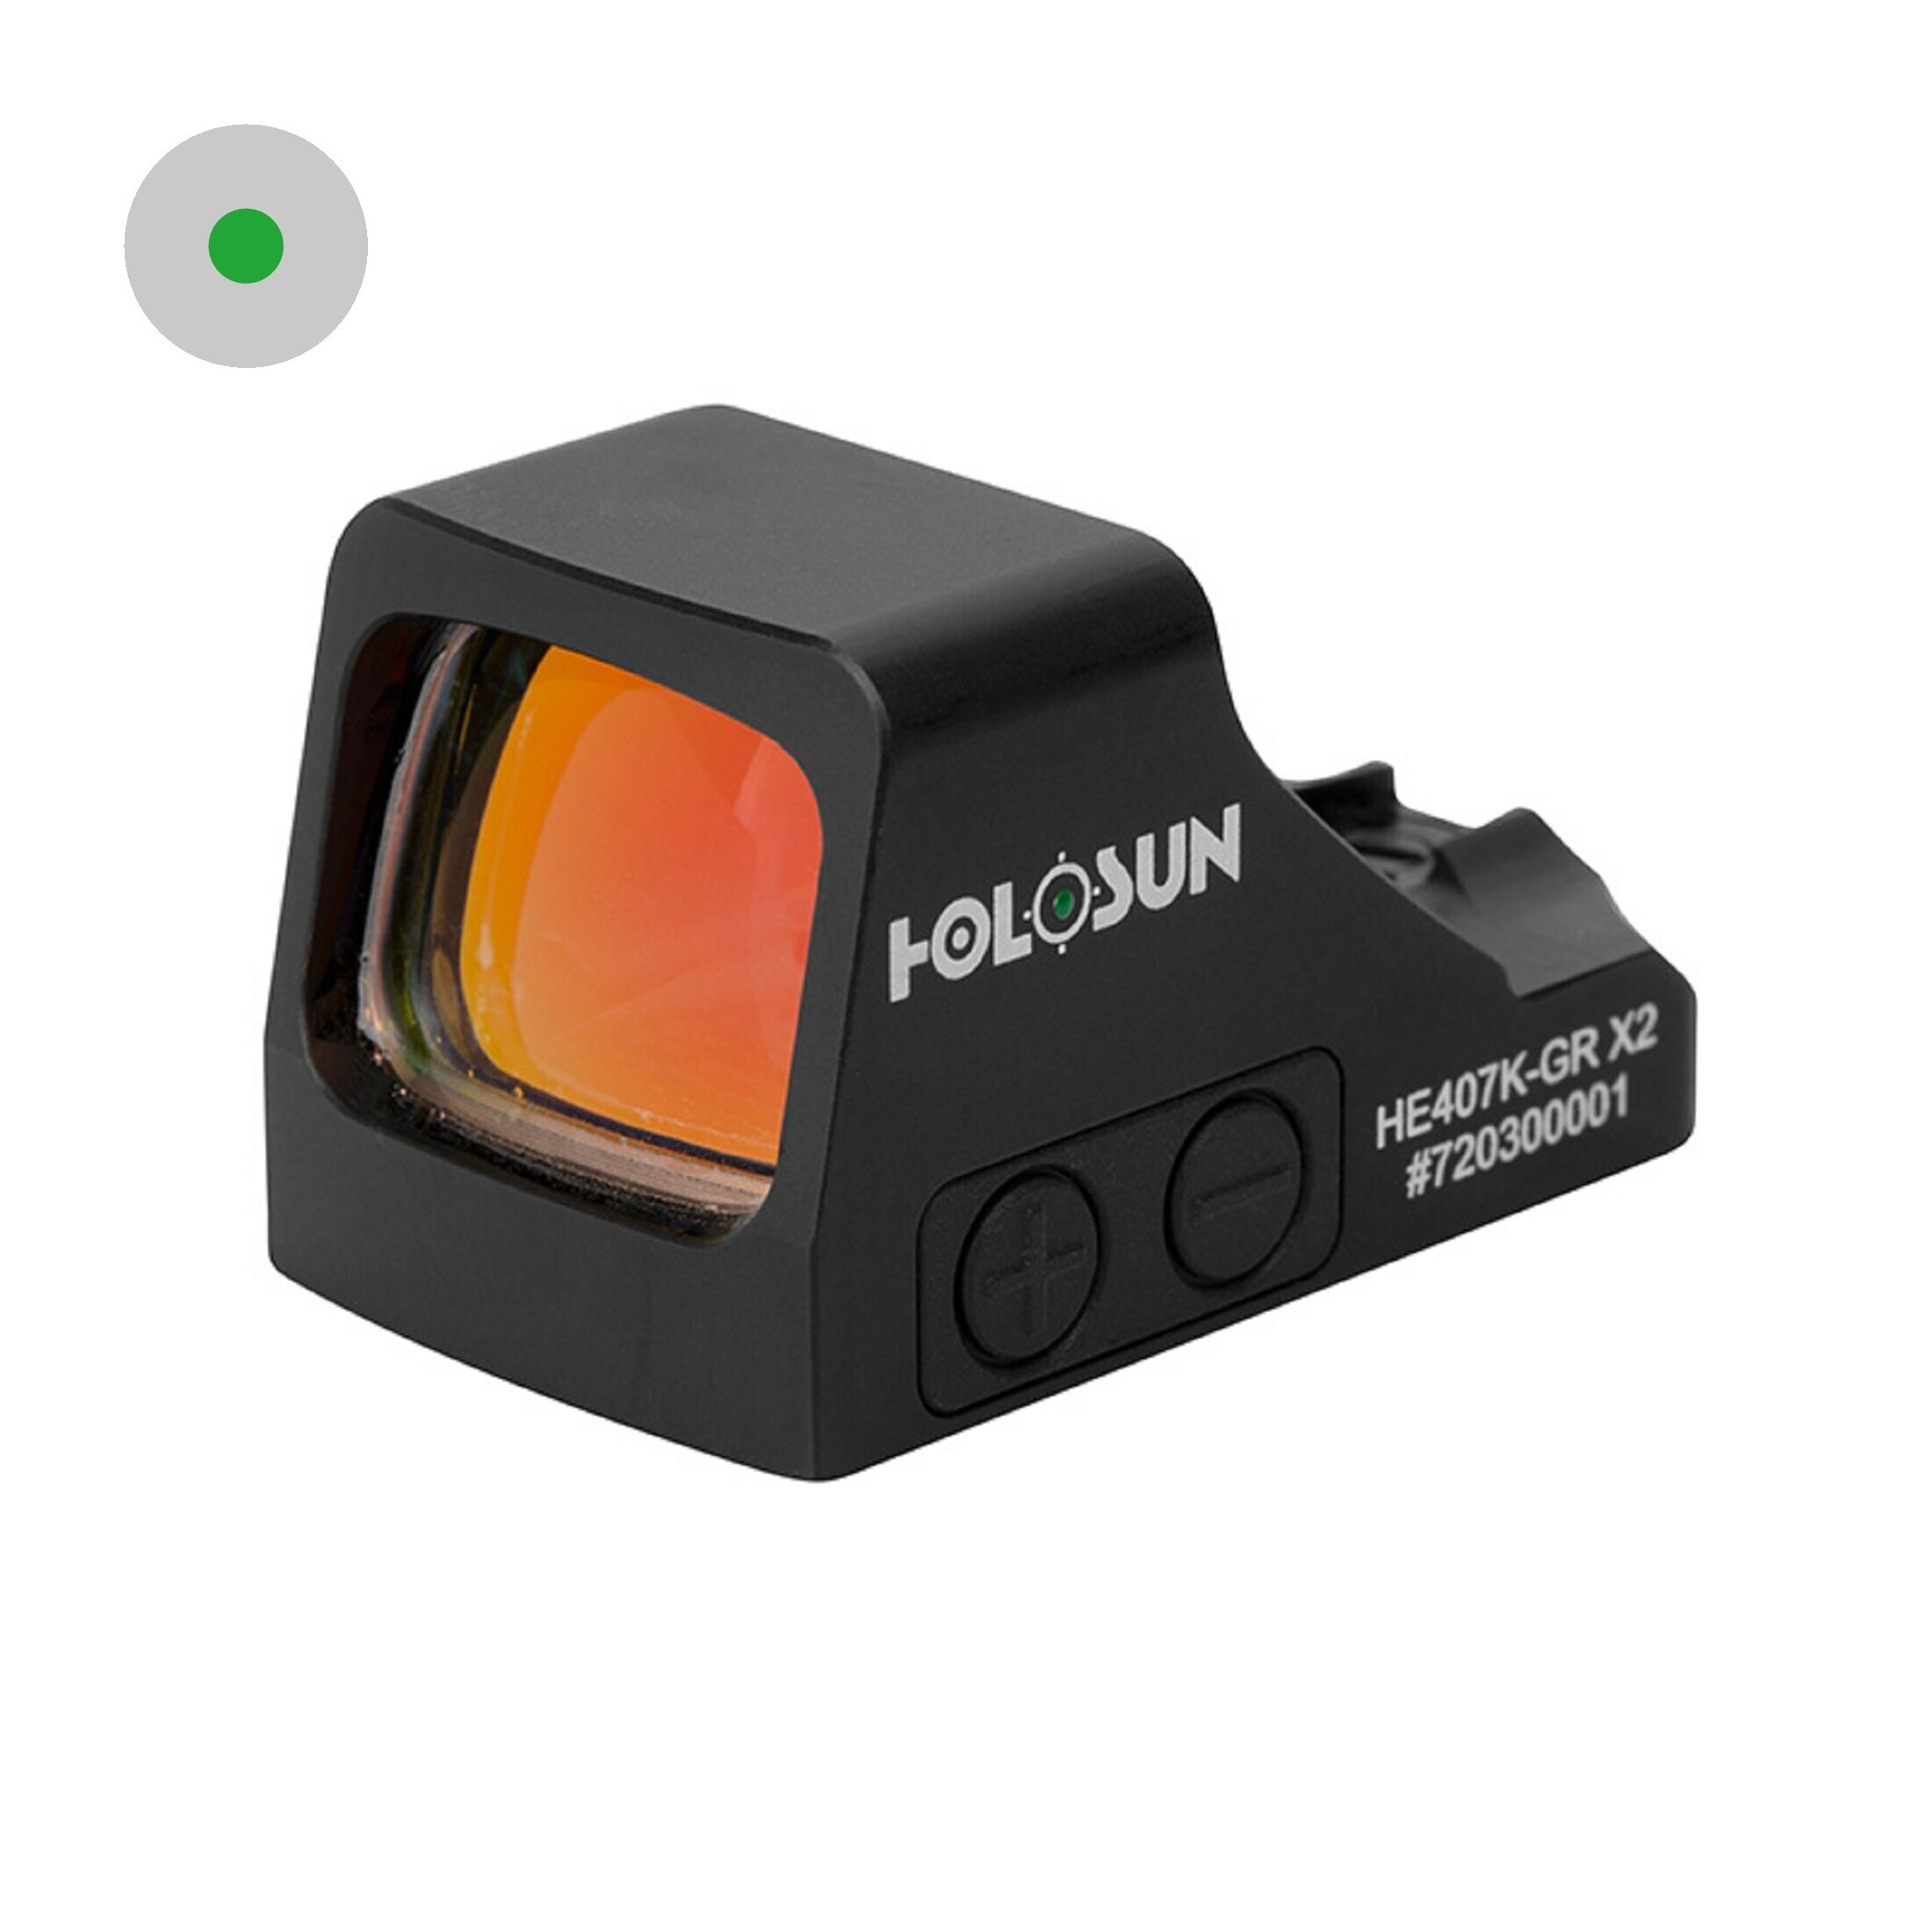 Holosun Dot Sight ELITE HE407K-GR-X2